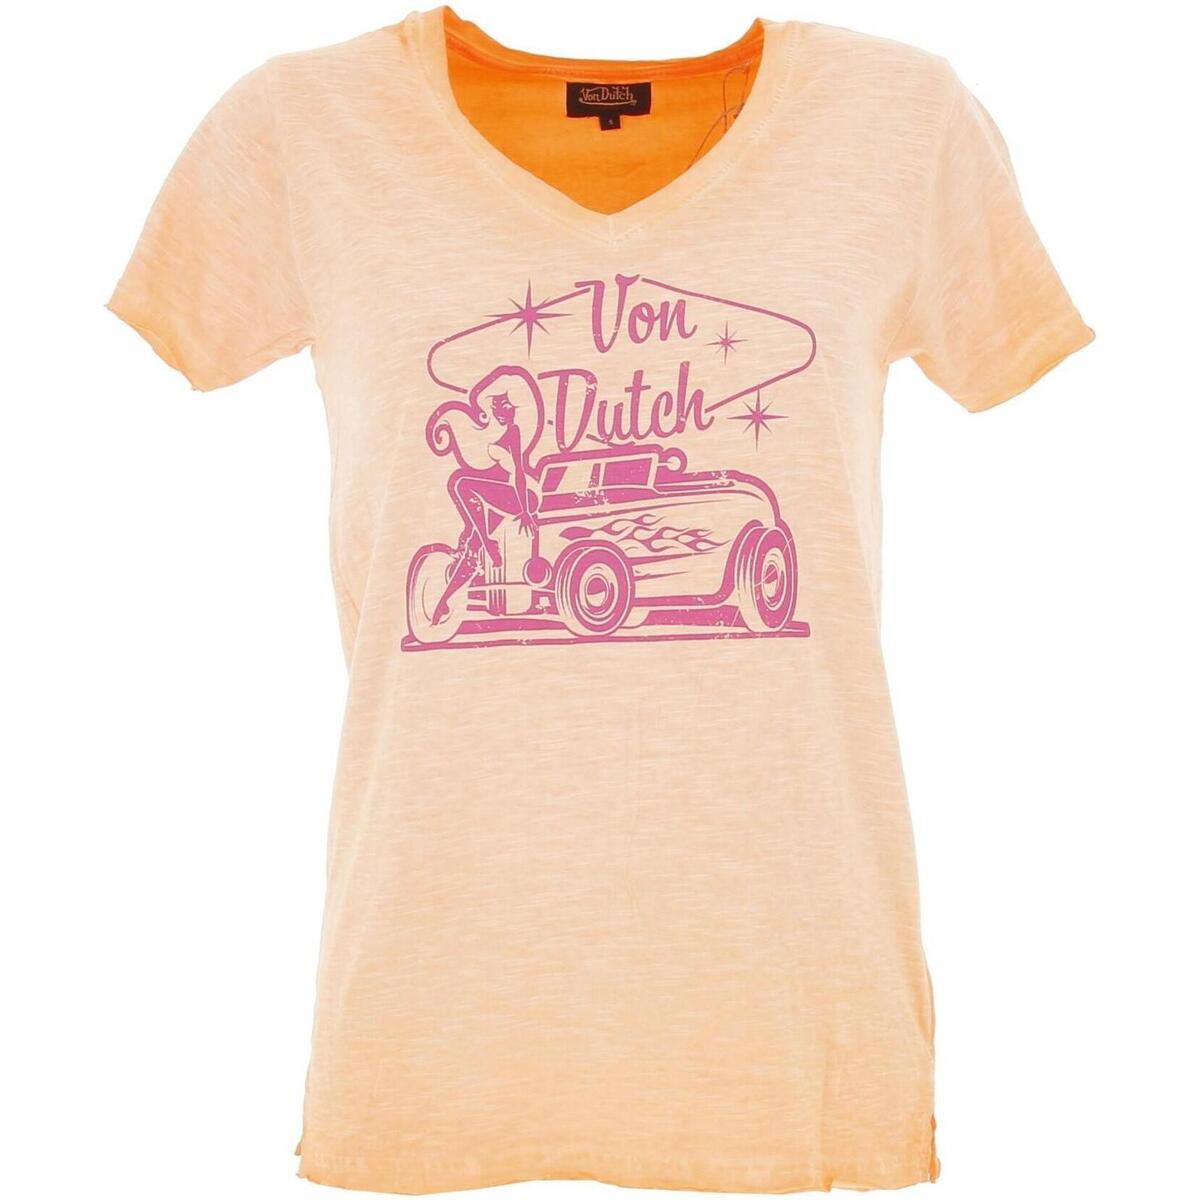 VêArmani Femme T-shirts manches courtes Von Dutch Vd tee shirt mc effet use print devant contraste Orange